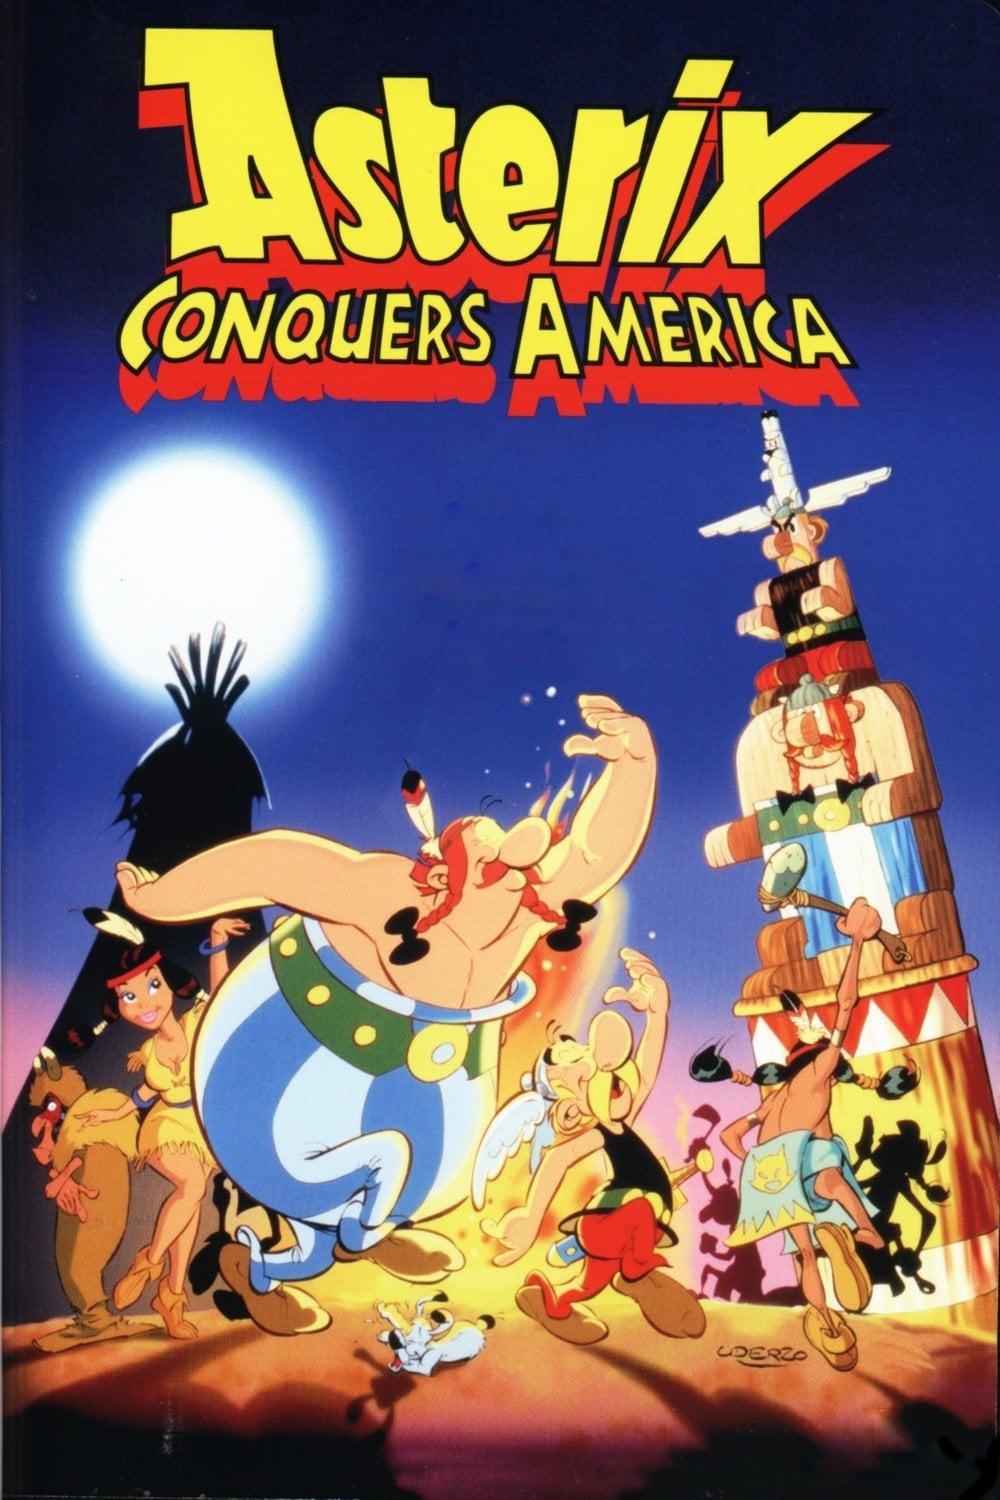 Asterix Conquers America poster